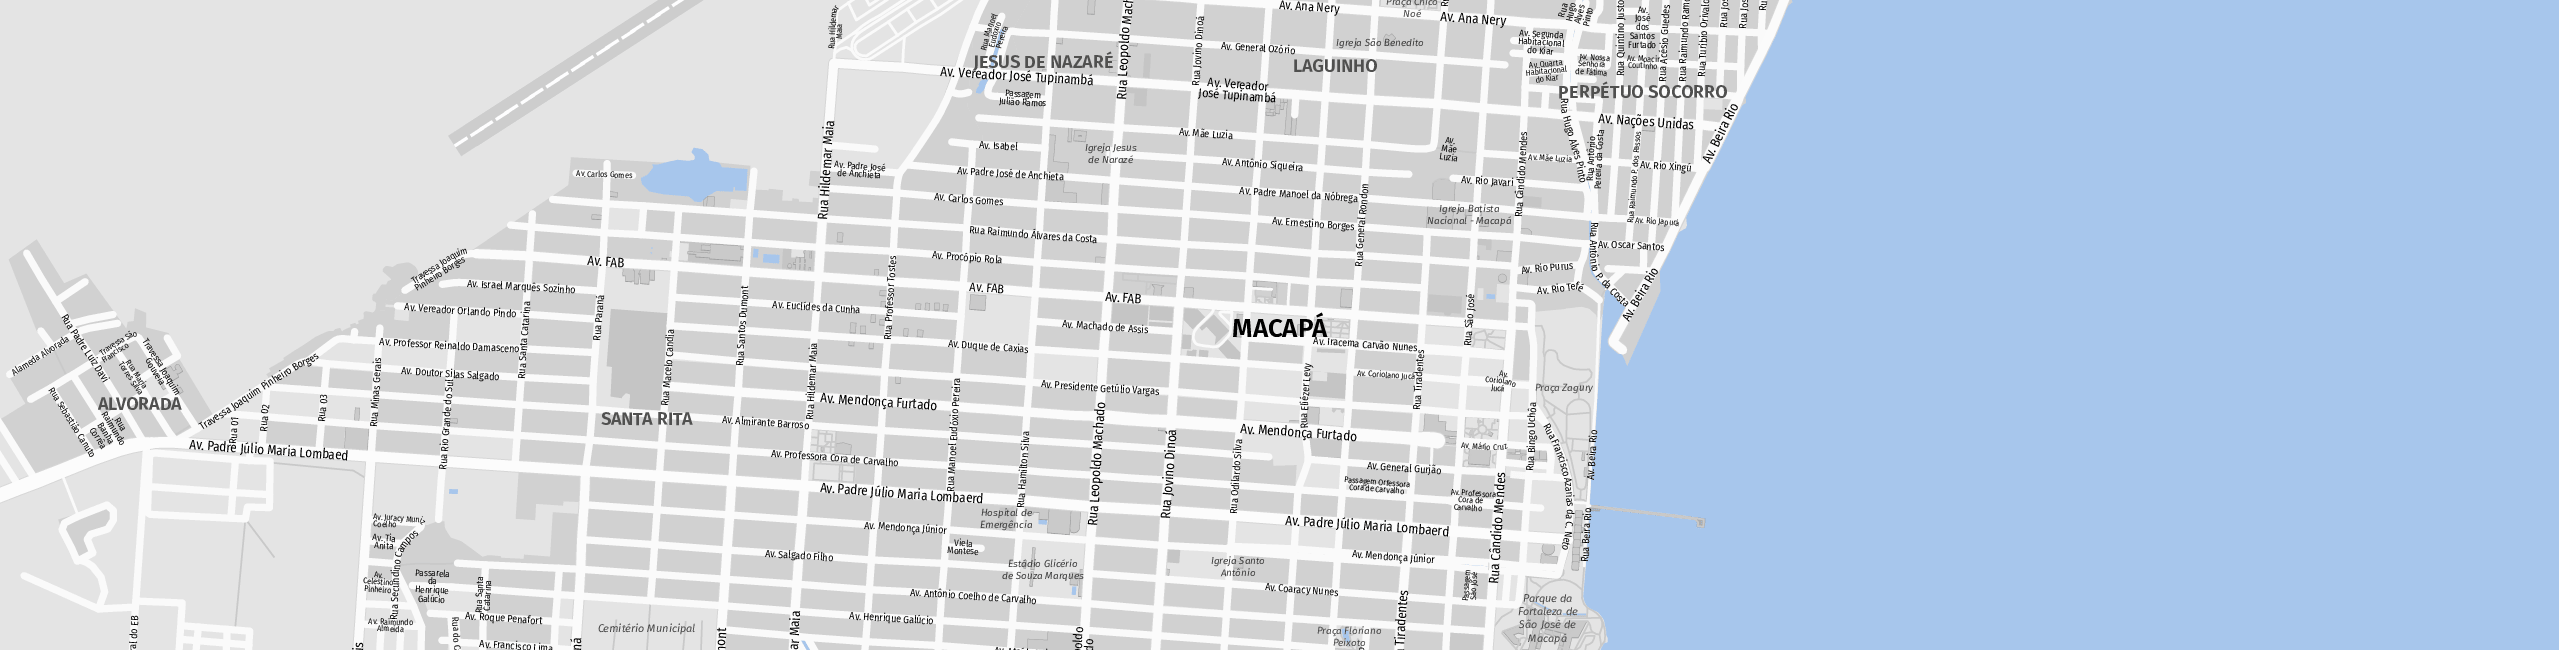 Stadtplan Macapá zum Downloaden.